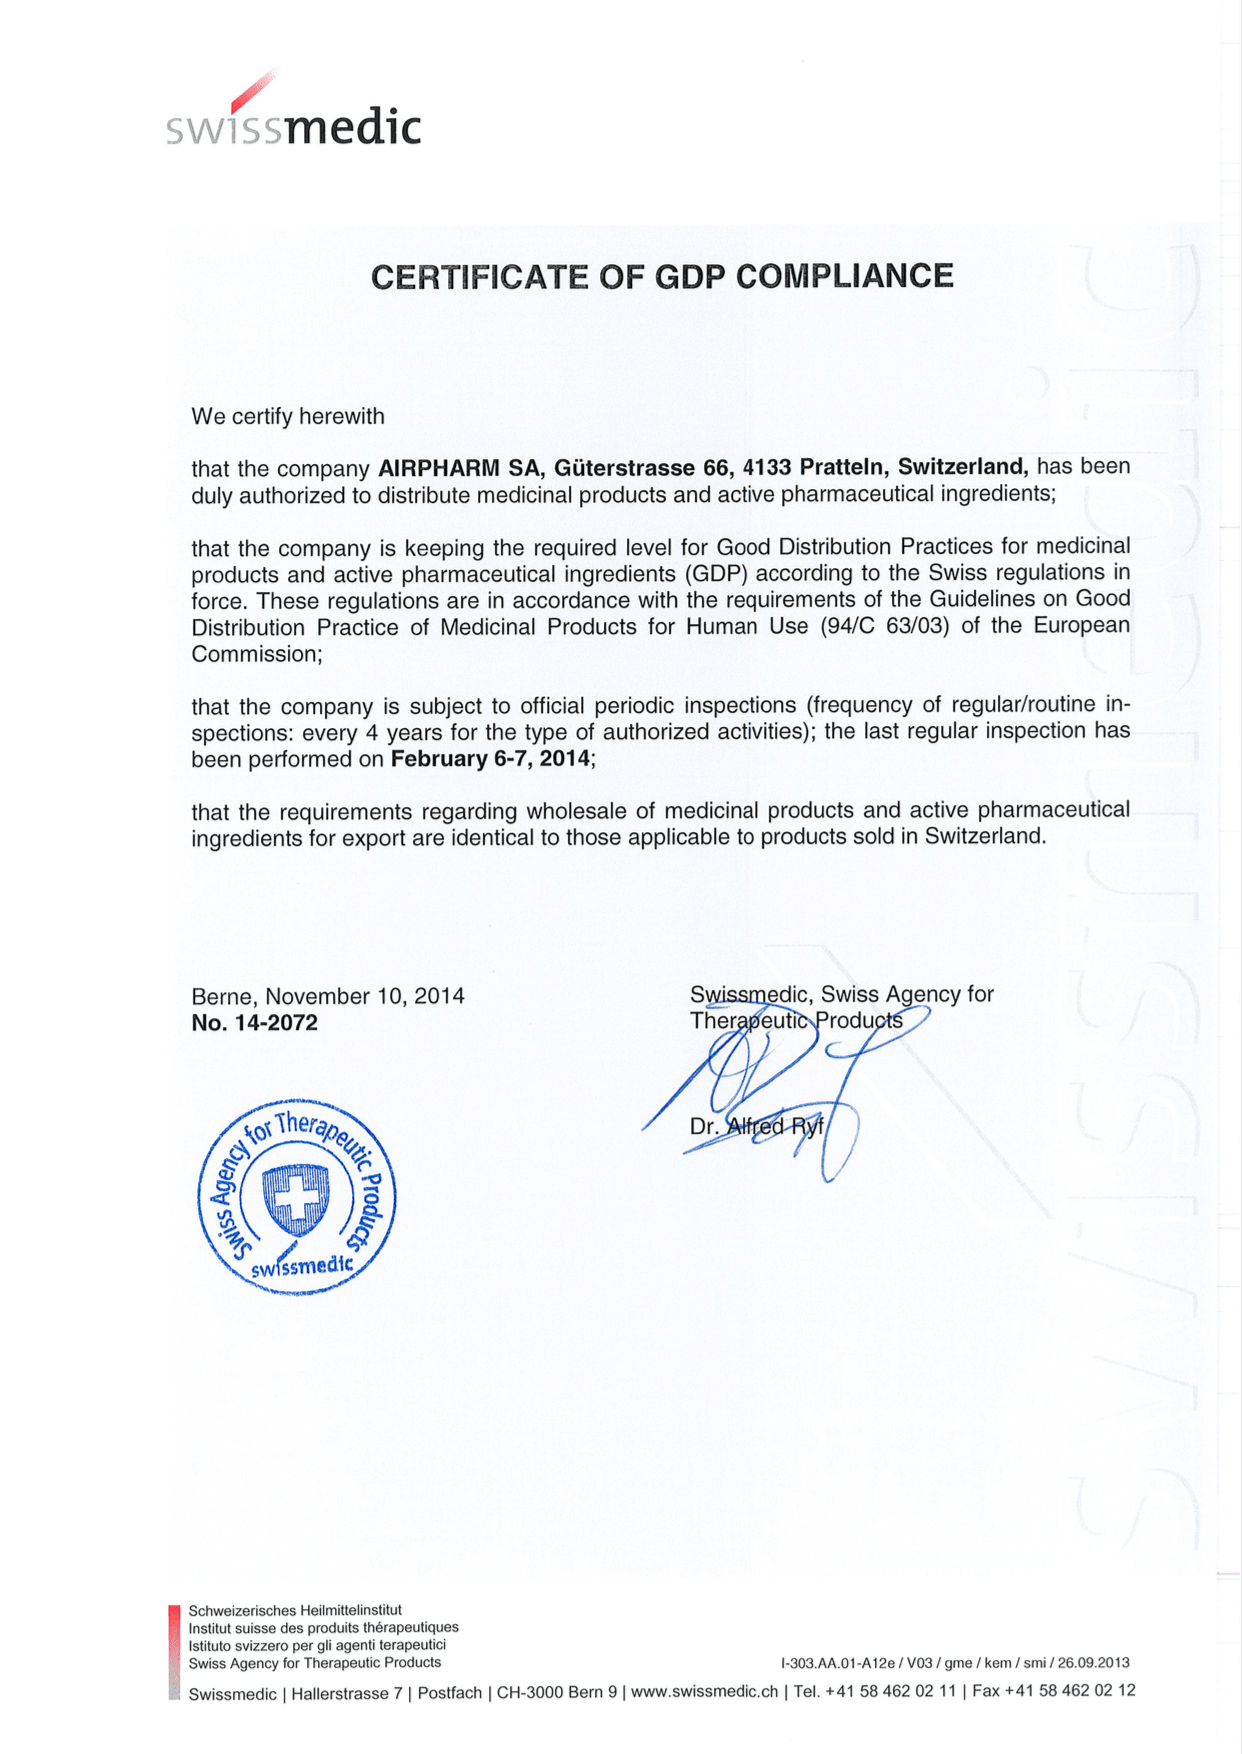 eu certificate of gmp compliance, tga certificate of gmp compliance, gmp certificate of compliance, health canada gmp certificate of compliance, swissmedic certificate of gmp compliance